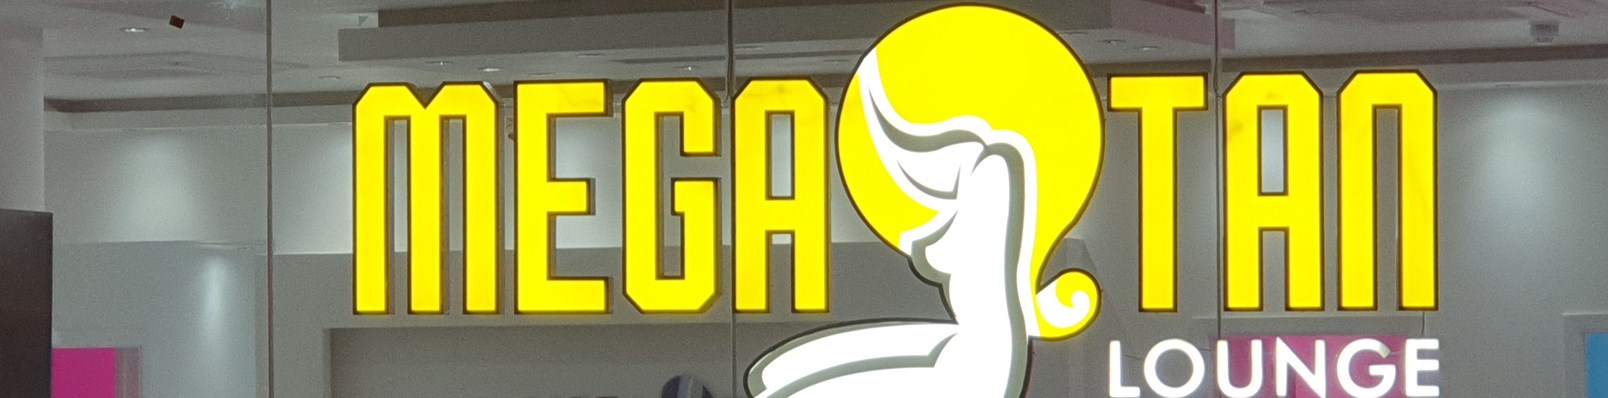 Mega Tan Lounge Loughton Illuminated Fascia By Signs Express Harlow